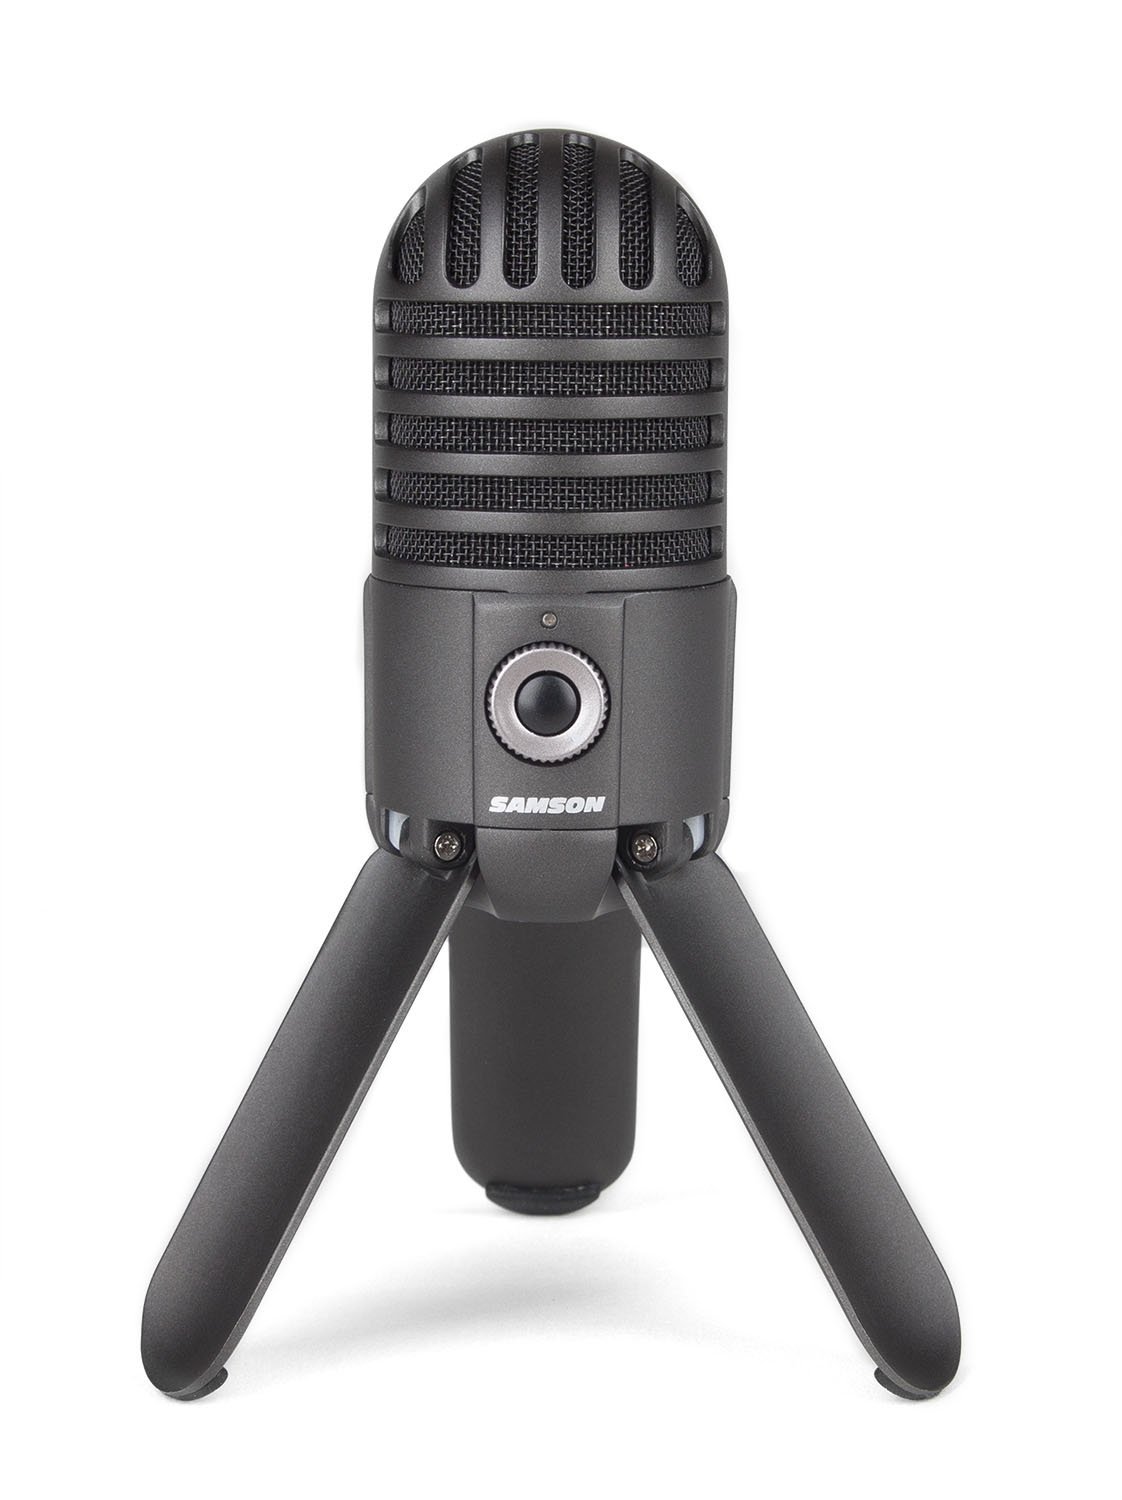 Samson &#039;Meteor Mic&#039; USB Studio Microphone On Sale for 24% Off [Deal]